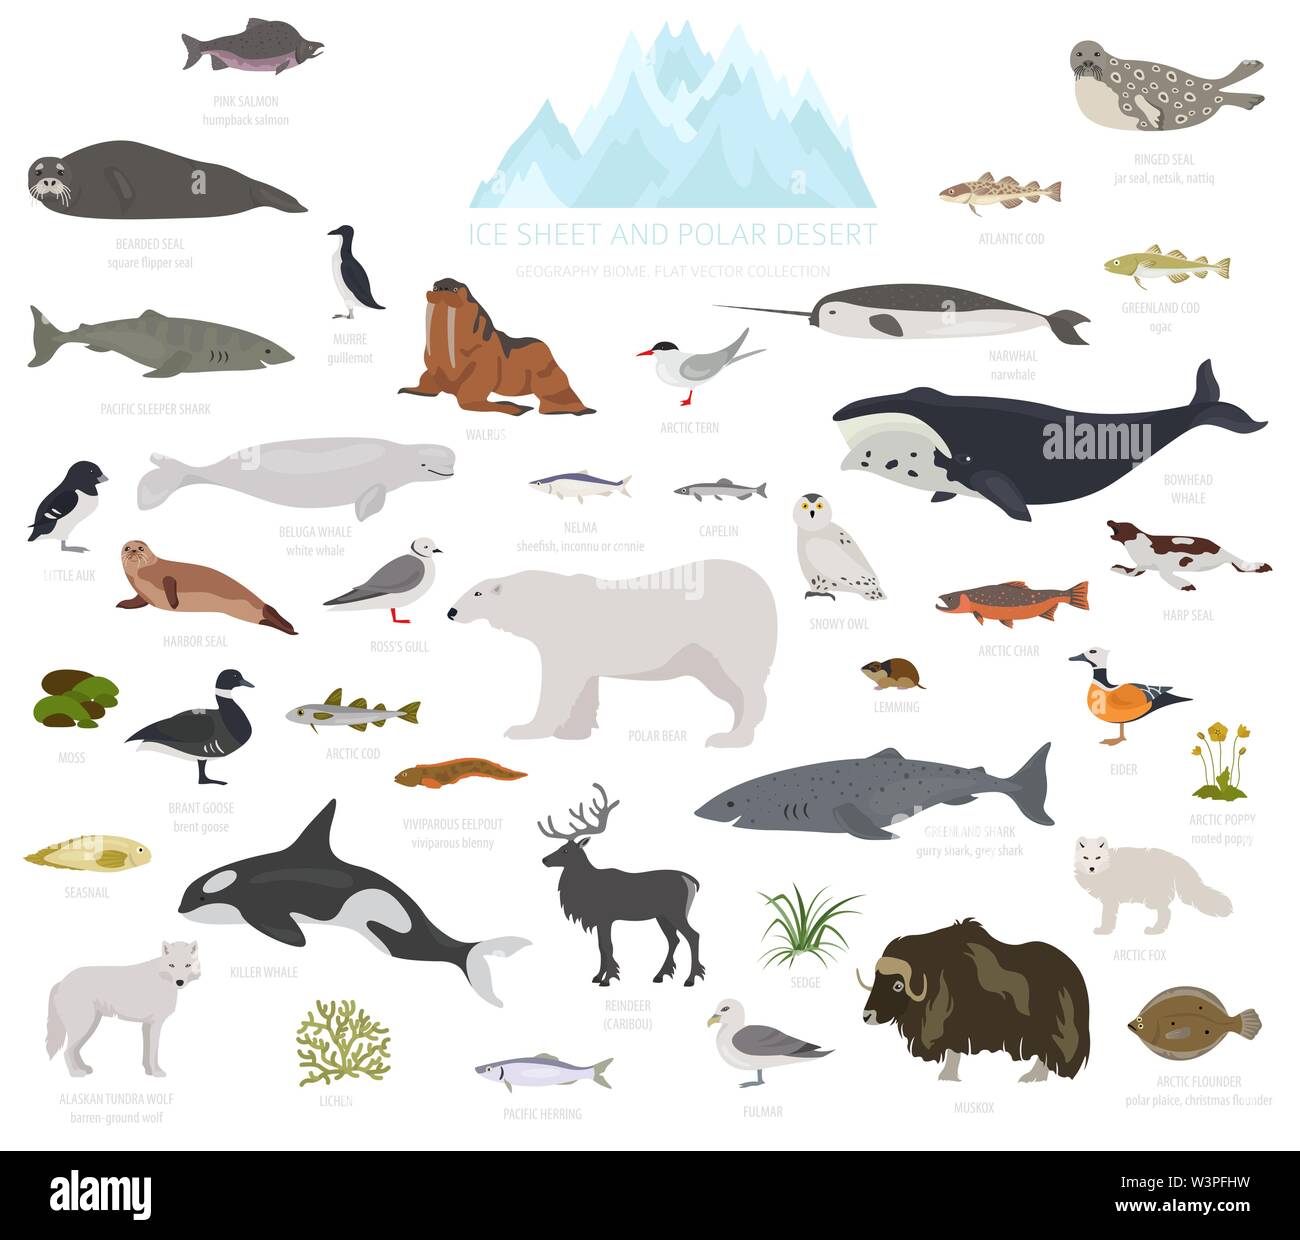 Ice sheet and polar desert biome. Terrestrial ecosystem world map. Arctic animals, birds, fish and plants infographic design. Vector illustration Stock Vector